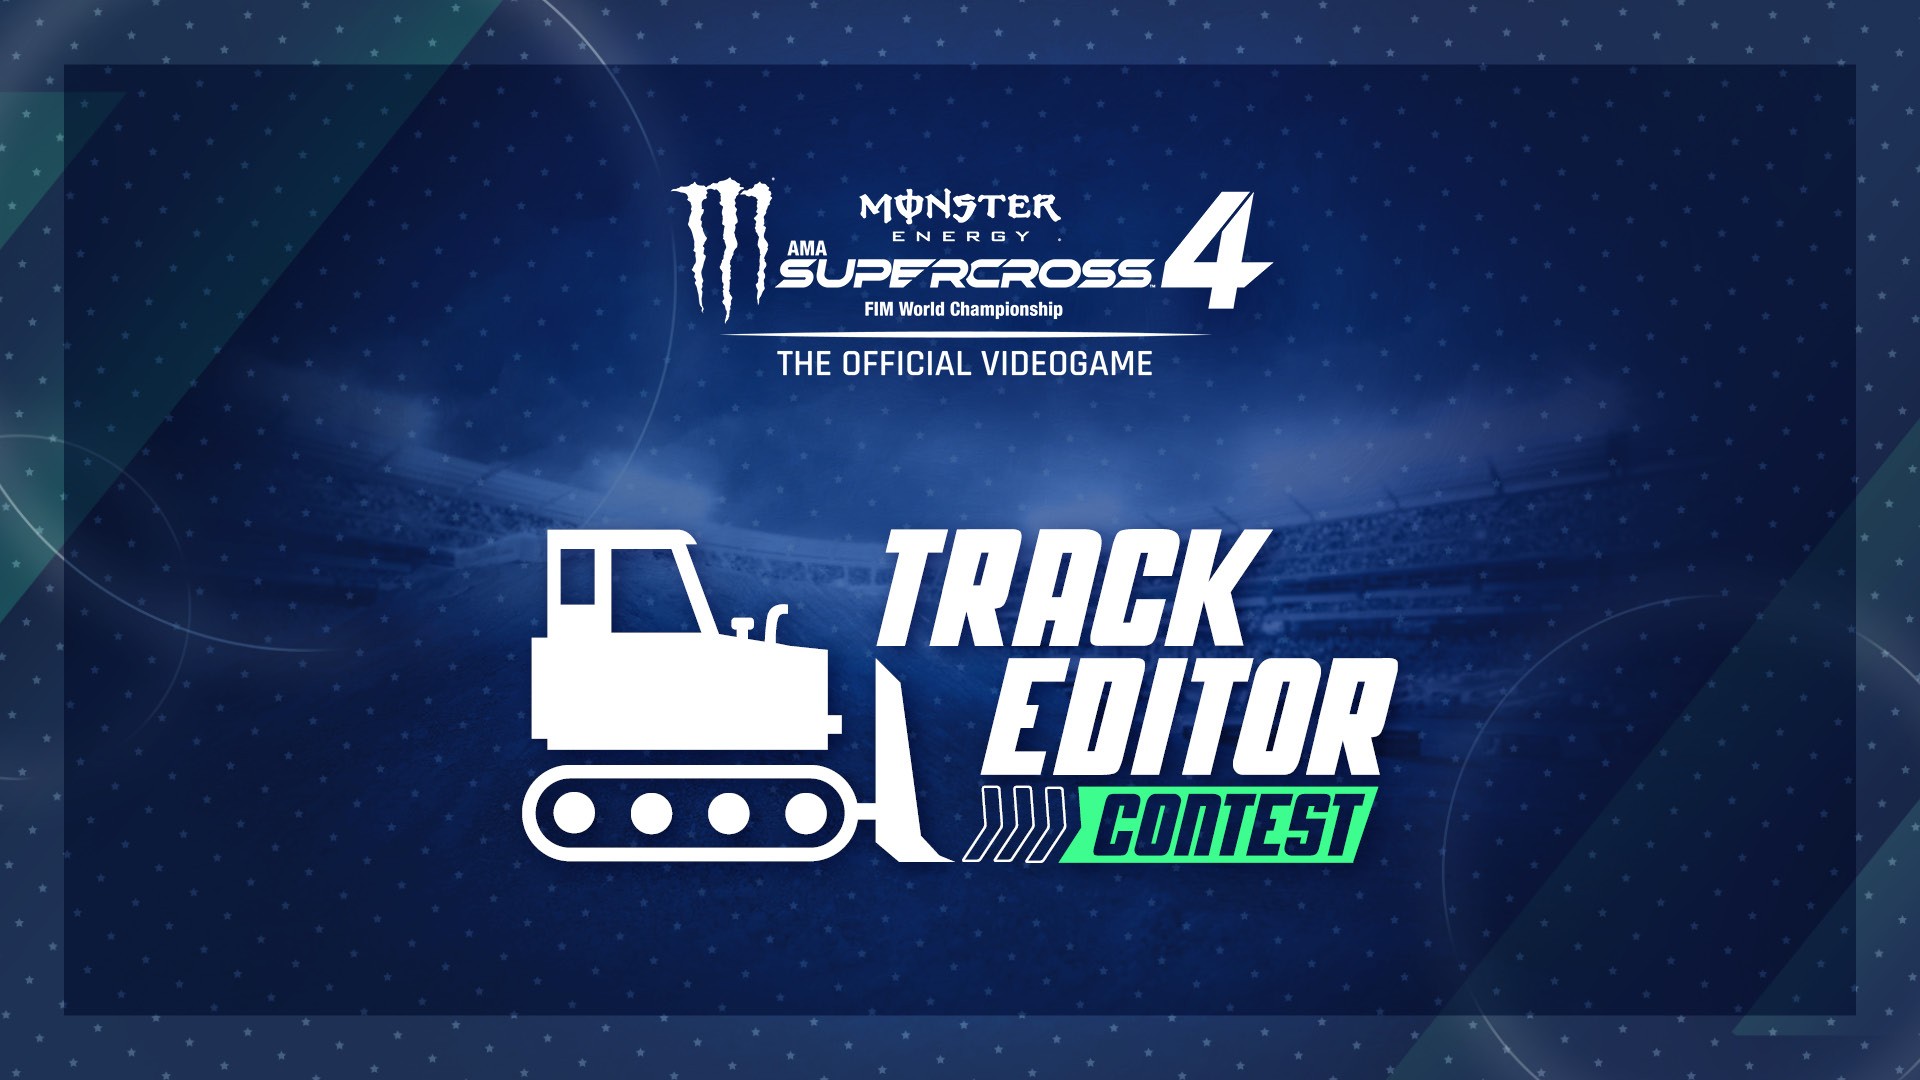 Monster Energy Supercross Track Editor Contest